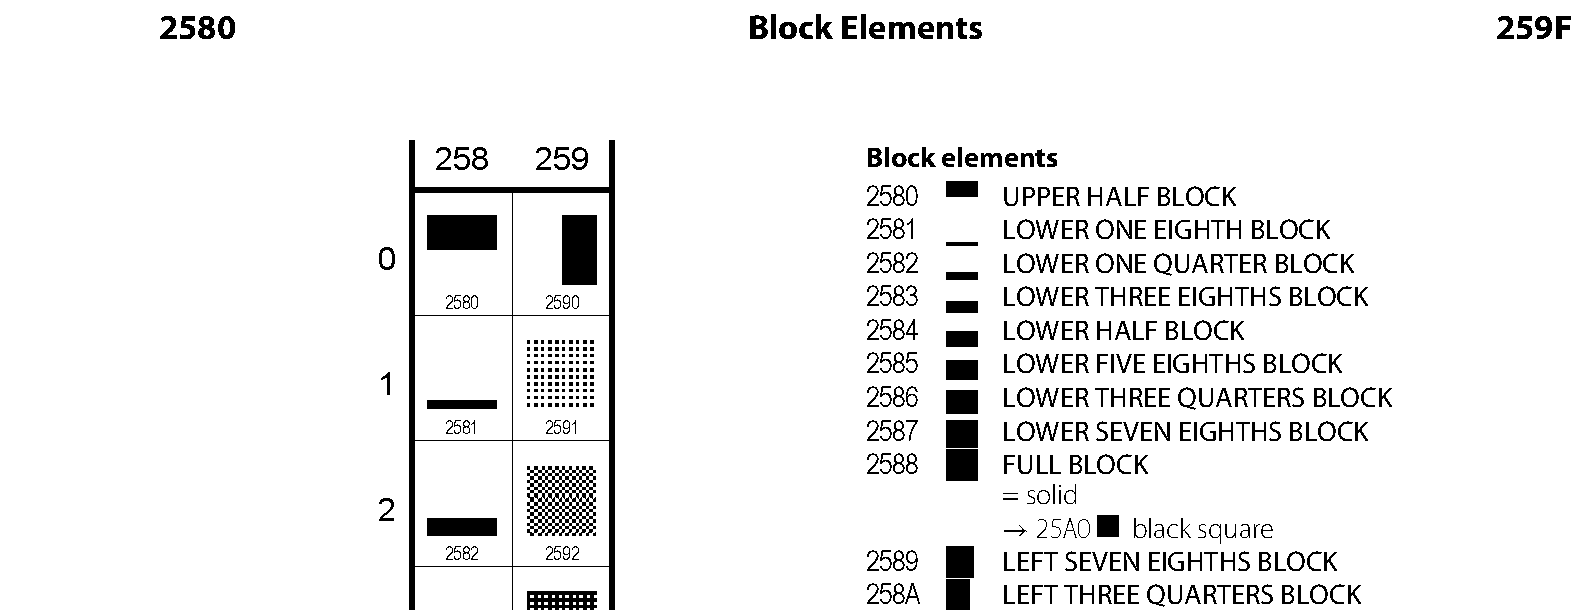 Unicode - Block Elements